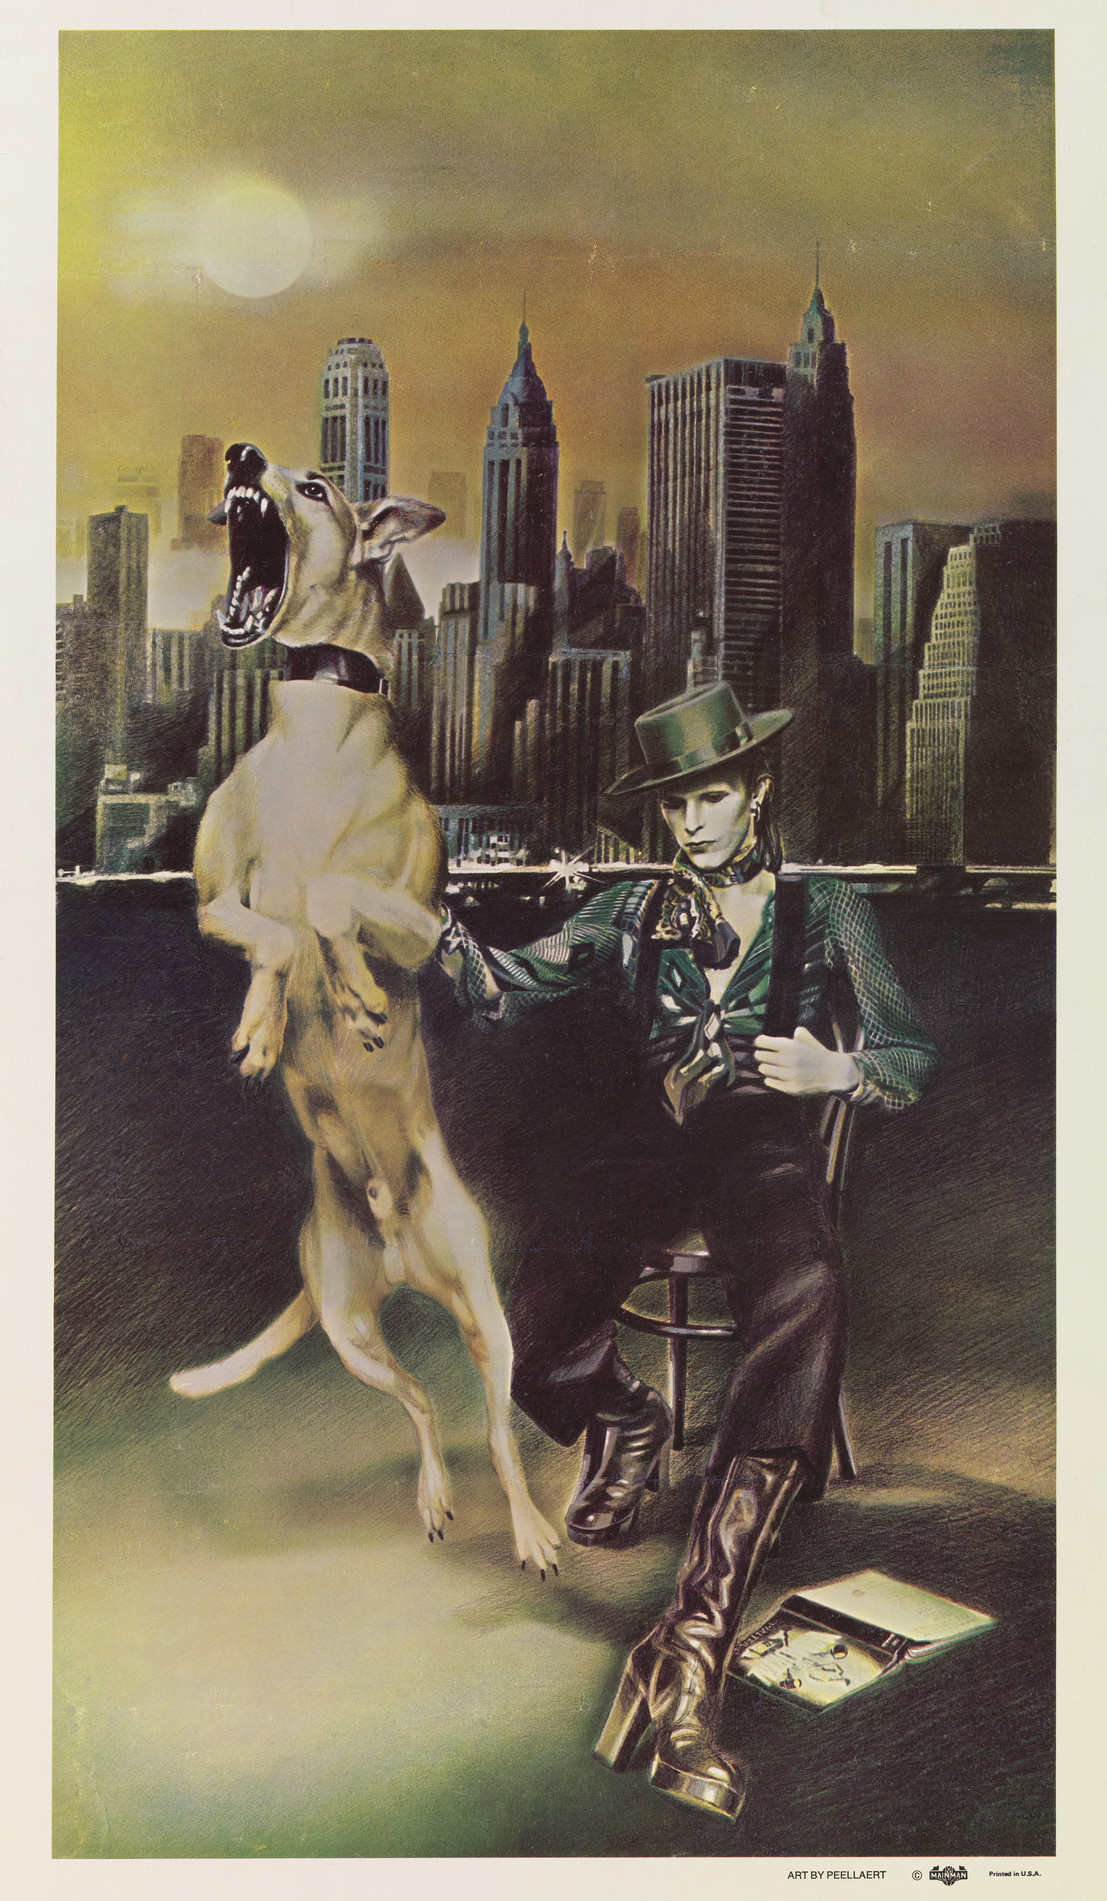 Guy Peellaert. David Bowie, Diamond Dogs. 1974. Source: MoMA